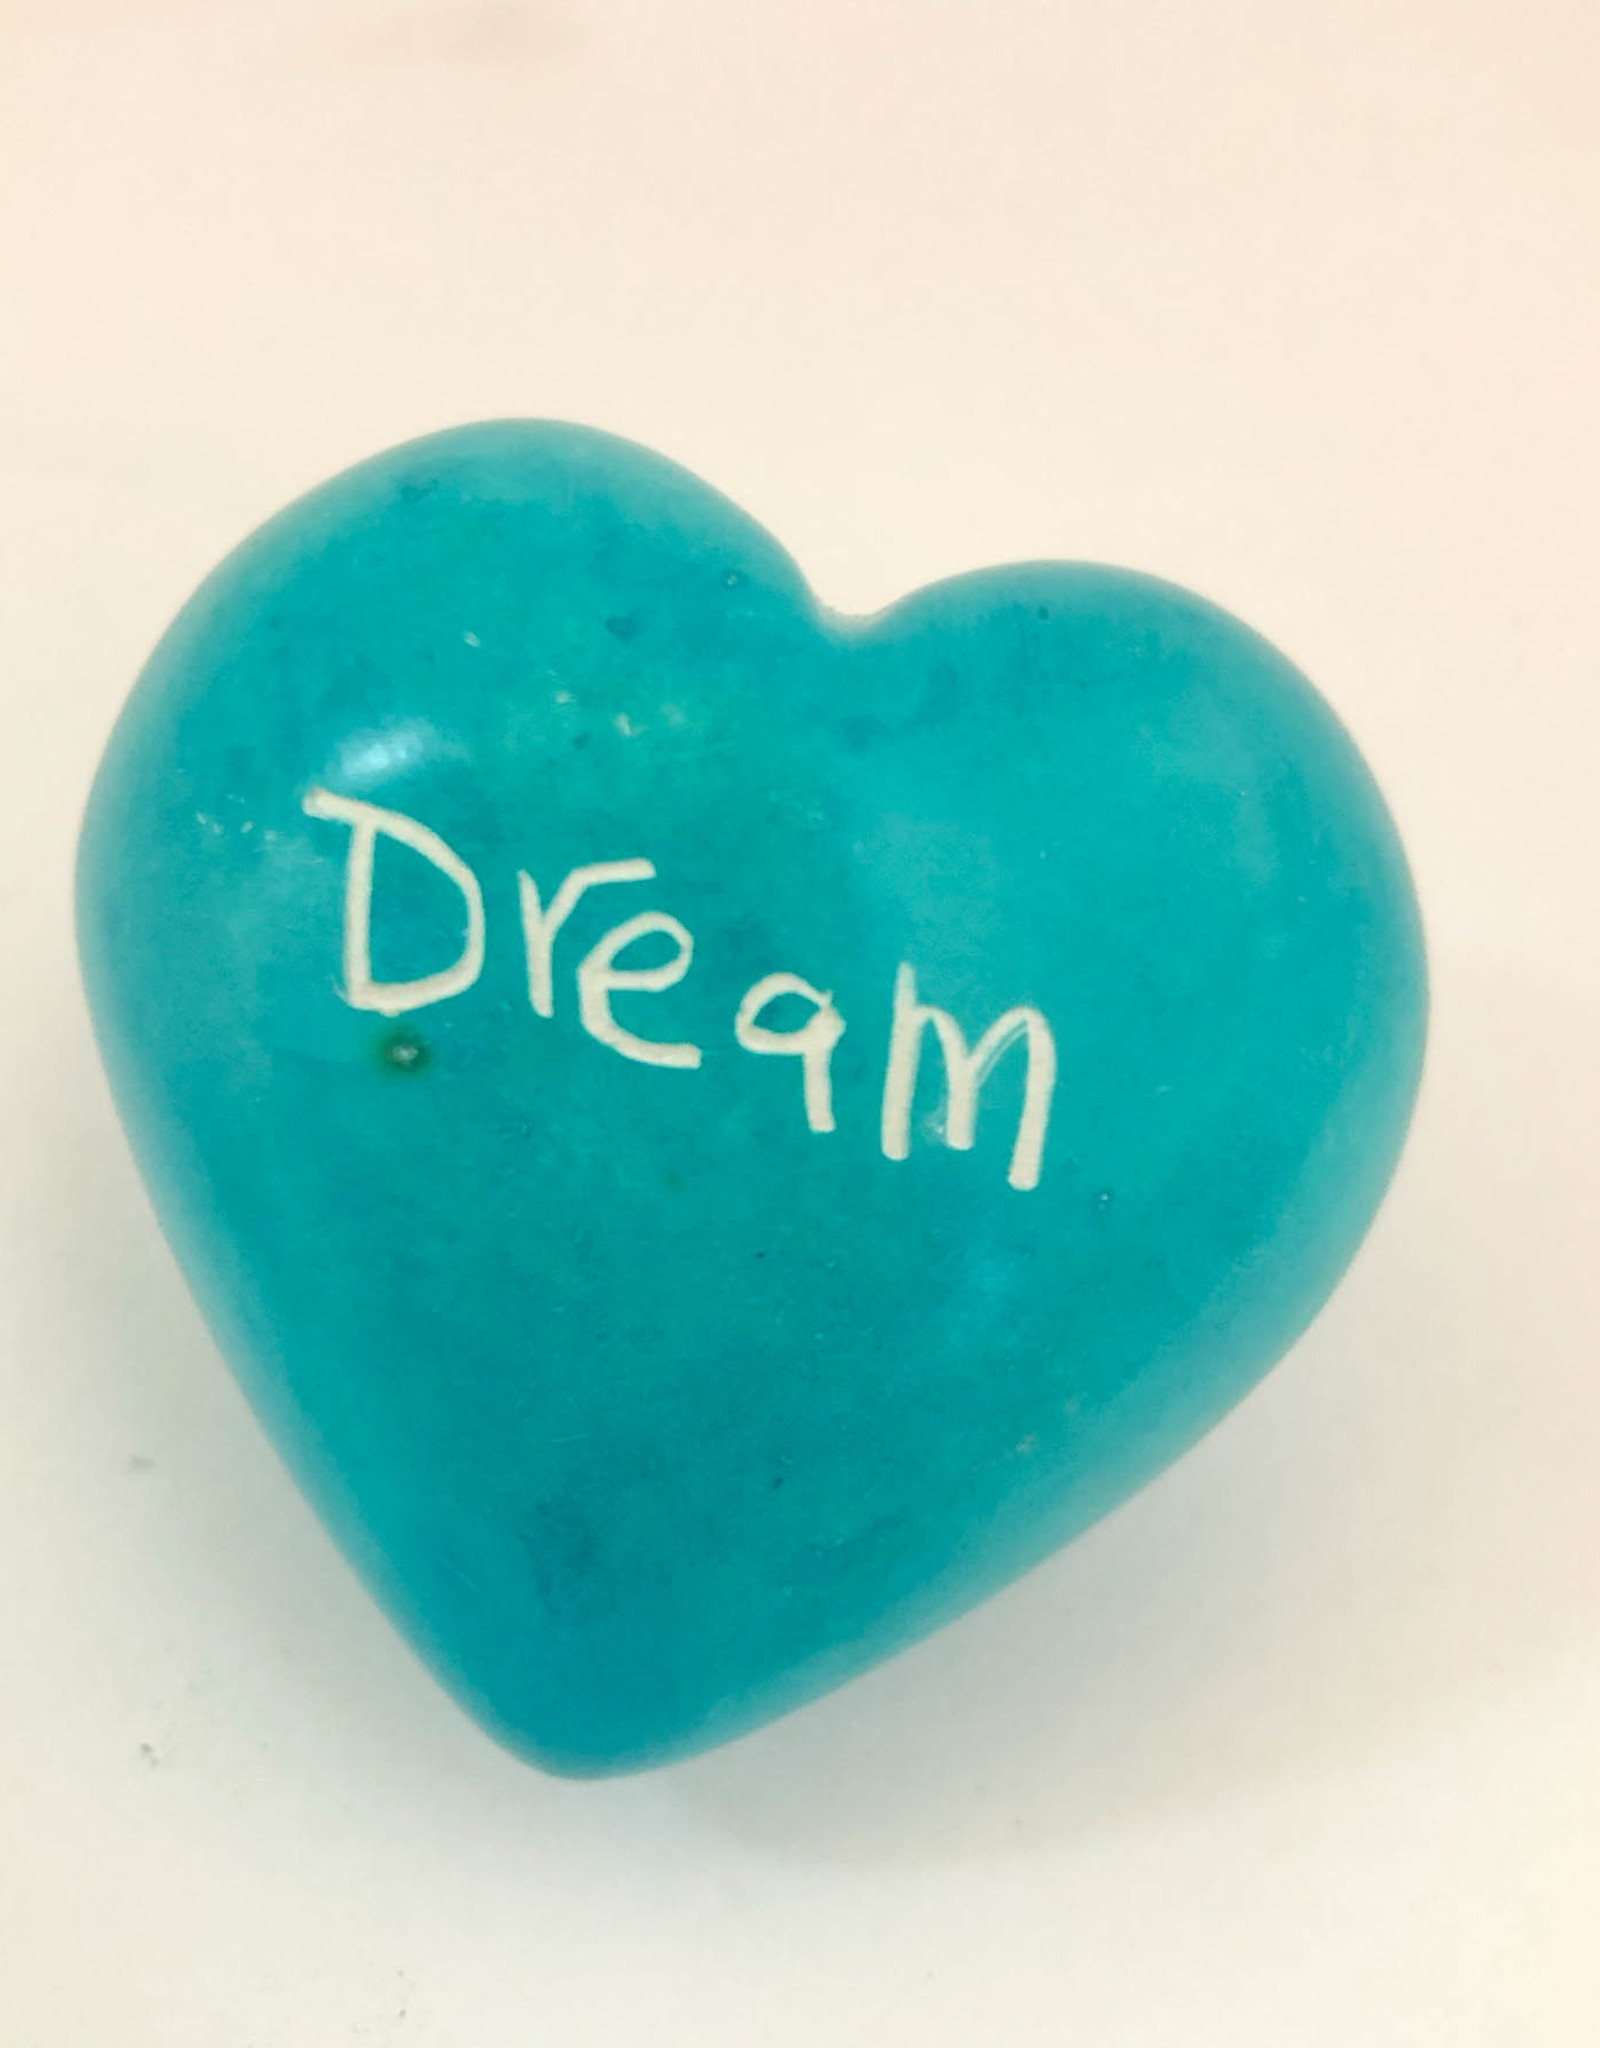 Venture Imports Word Hearts - Dream, Pale Blue